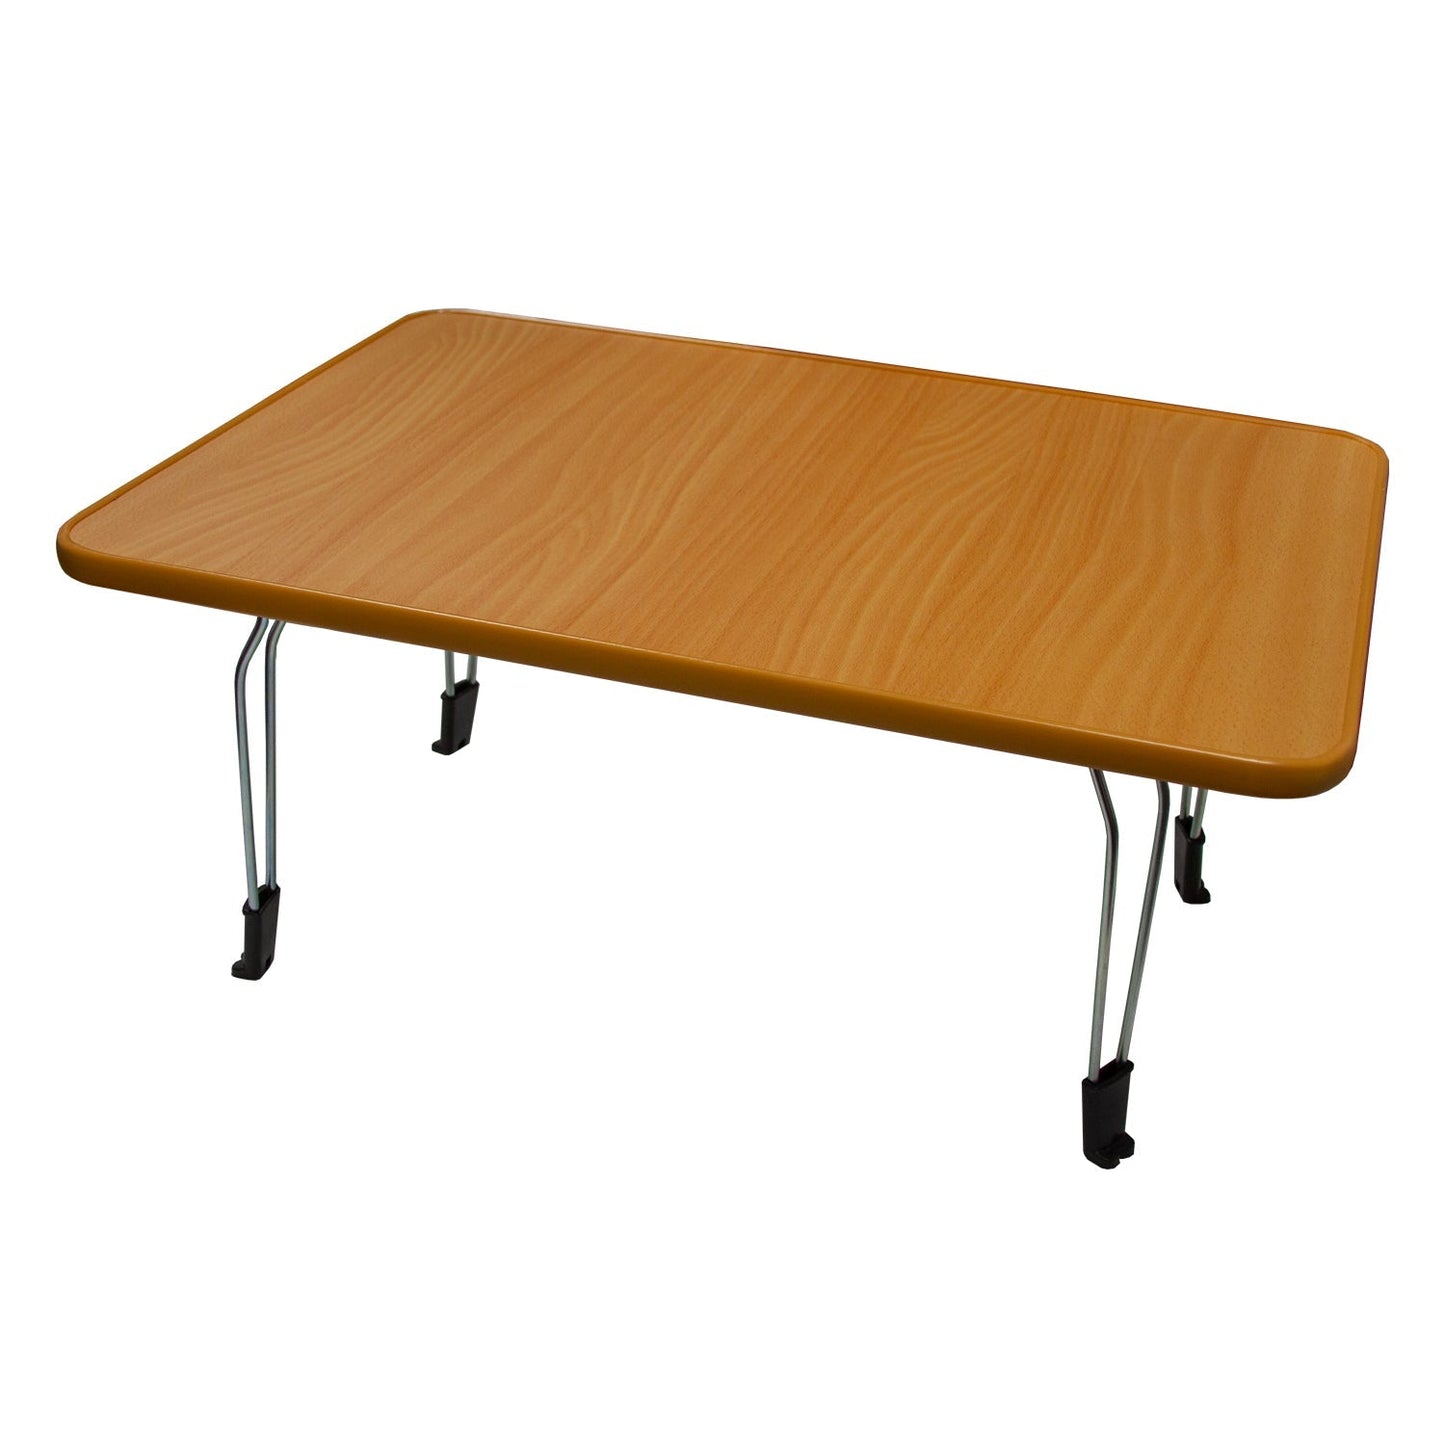 Portable Foldable Hardwood Design Table (Extra Small)